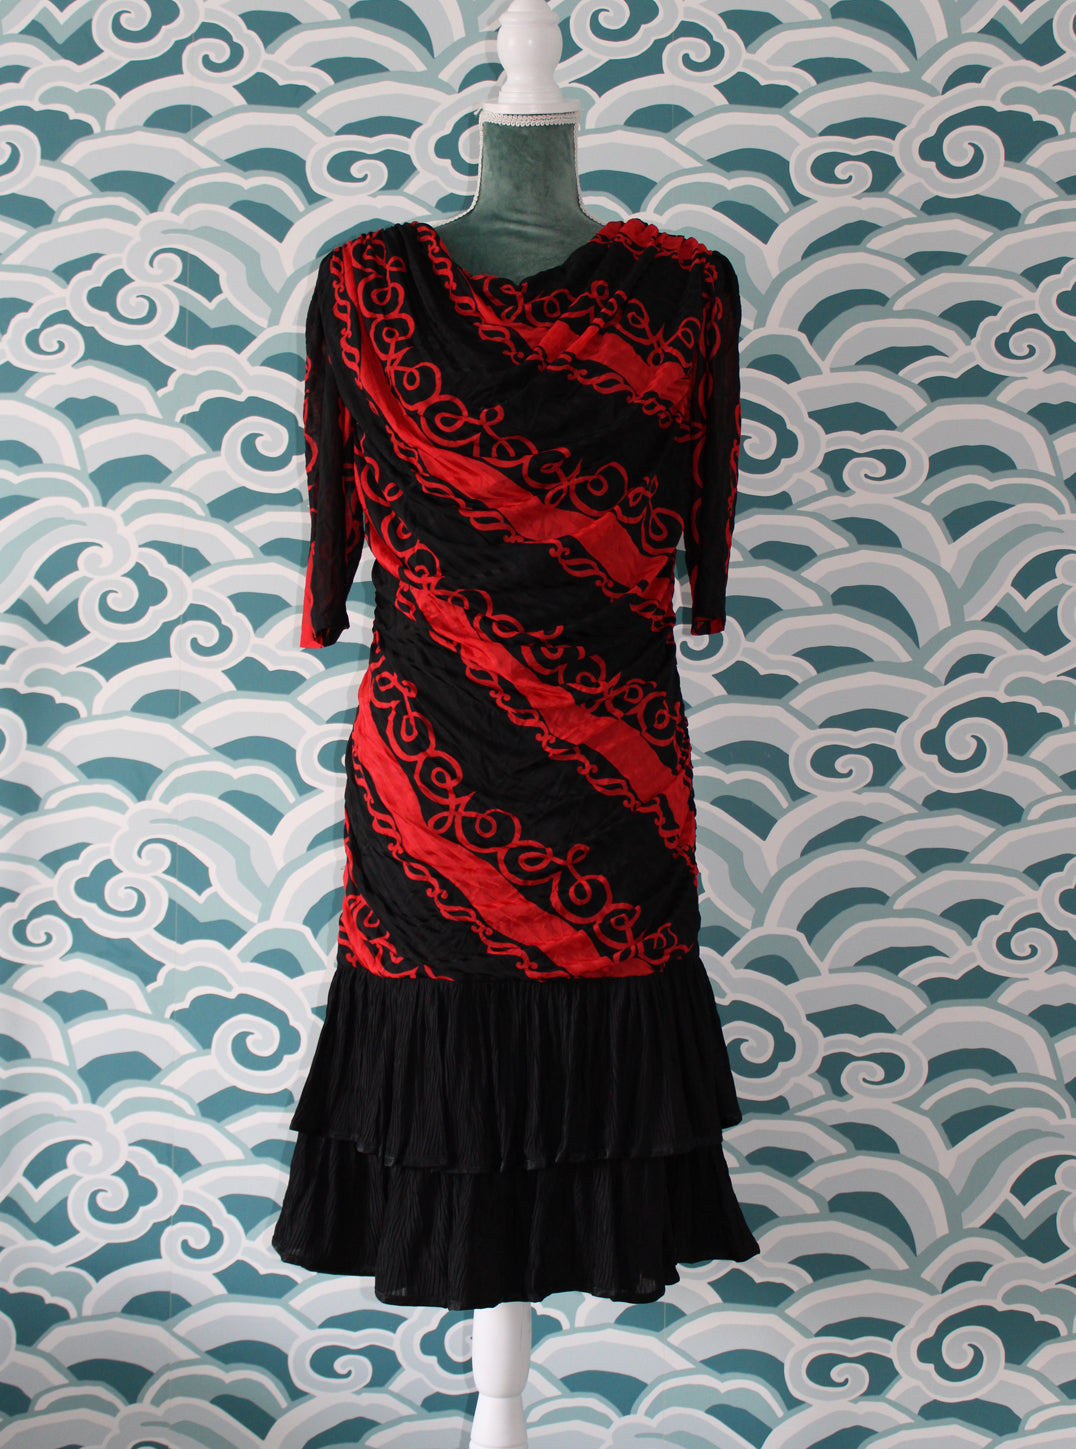 1980s Black and Red Dress Madgra Vintage